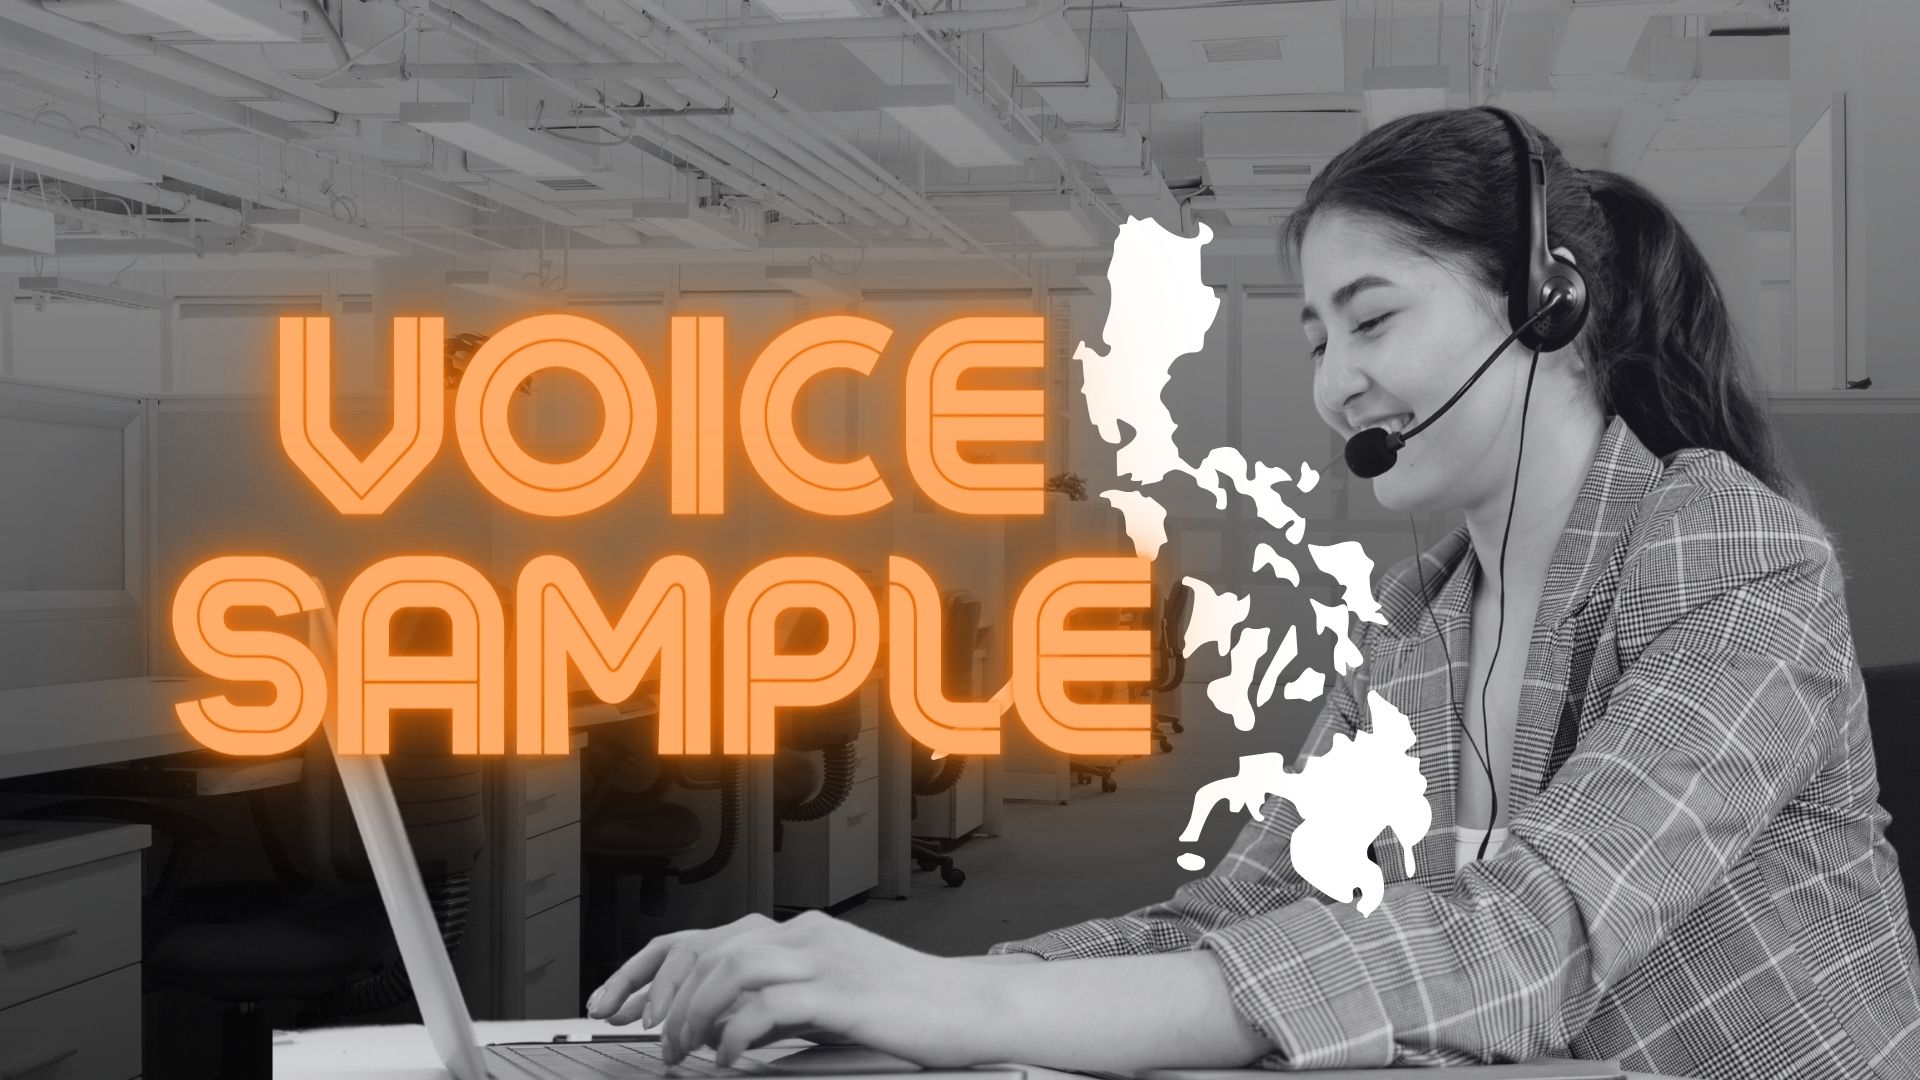 hire customer service representatives BPO Philippines call centers Voice Sample